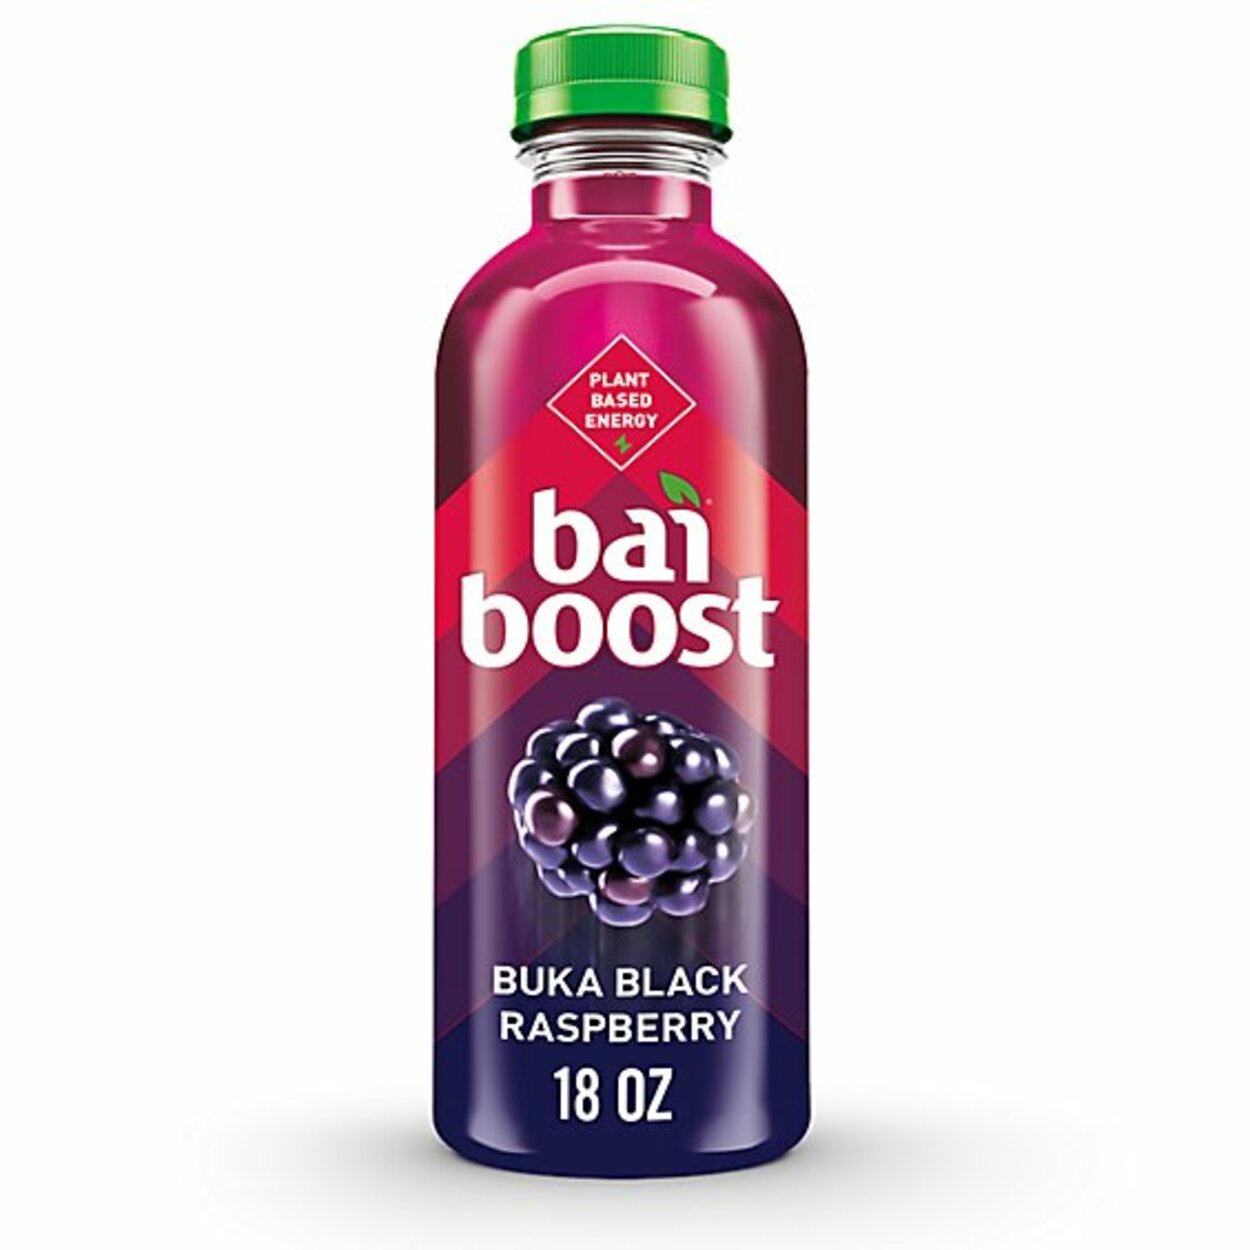 
Buka Black Rasberry Flavor